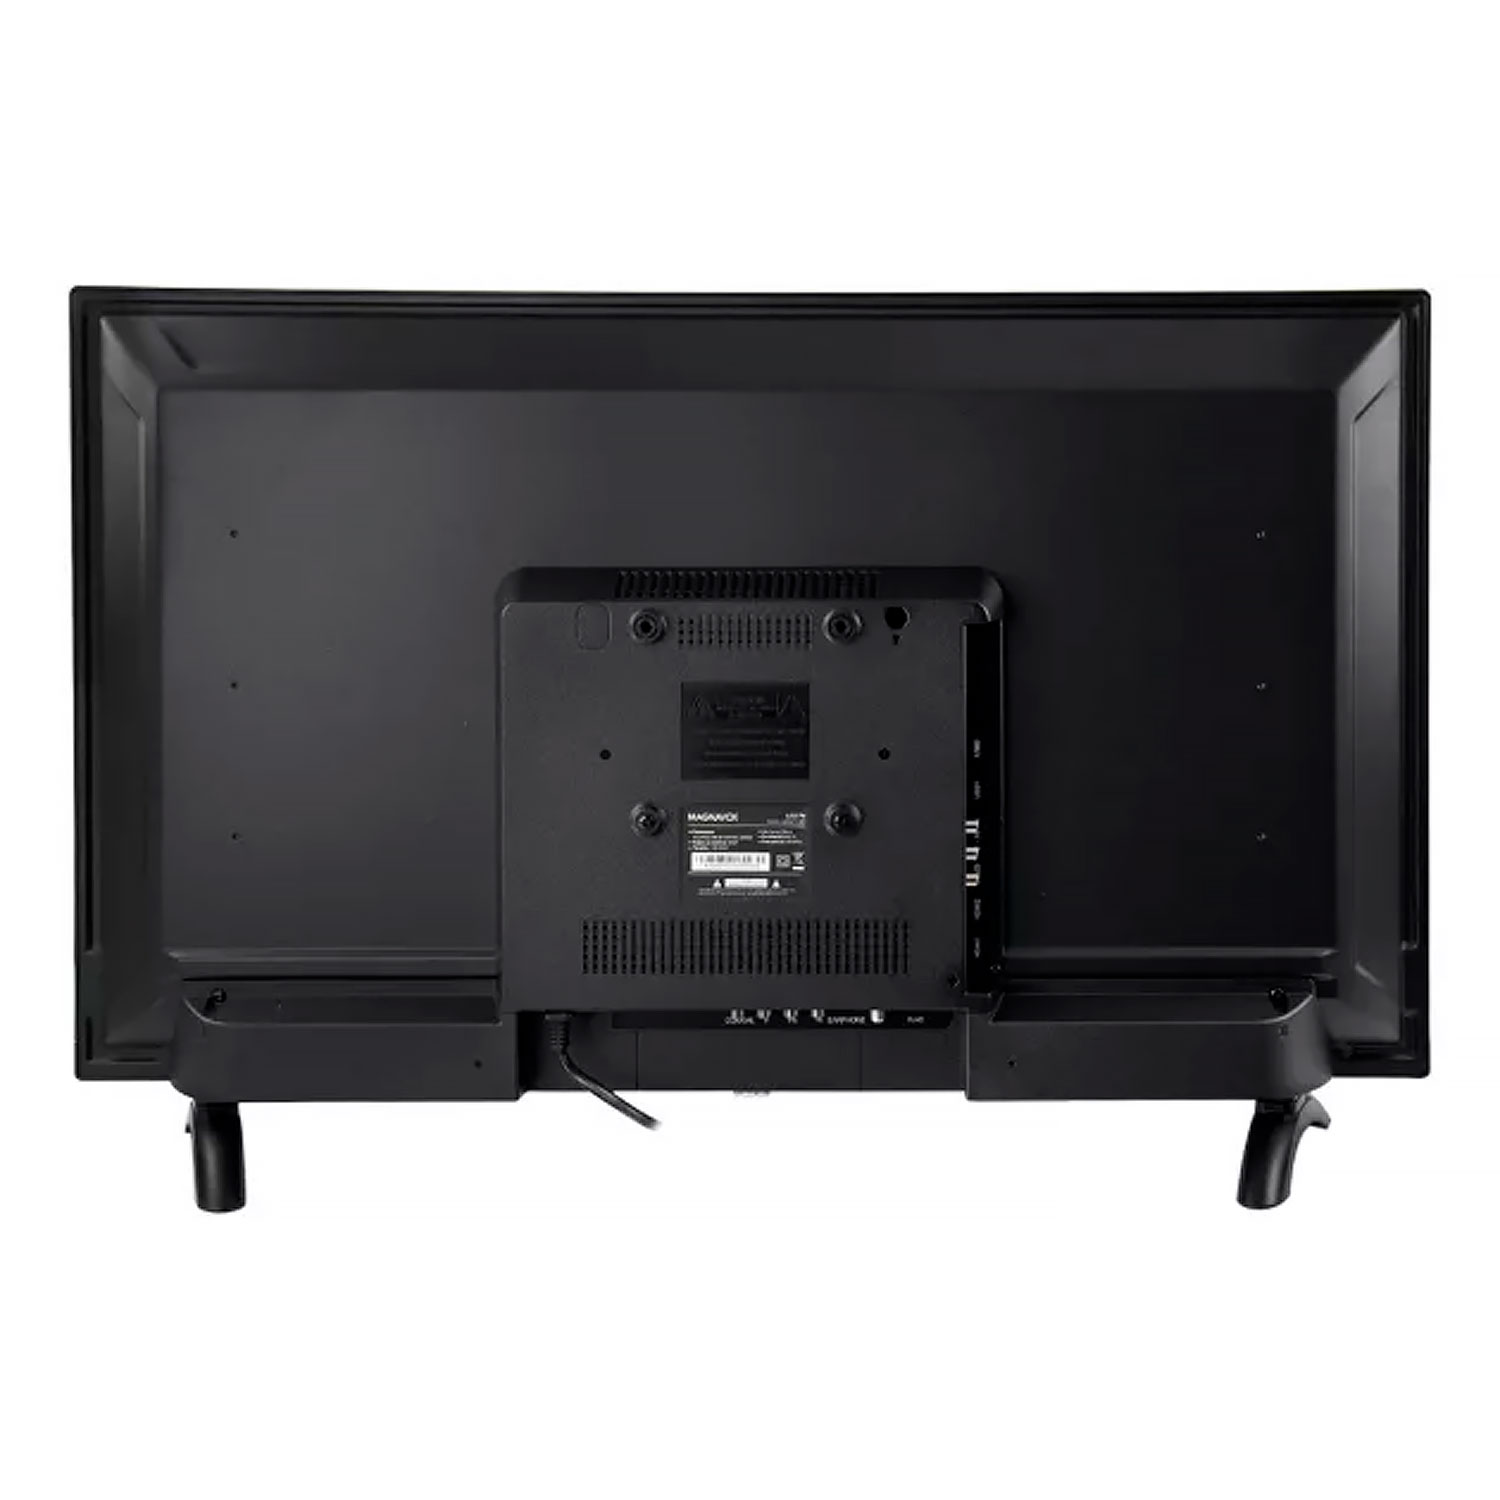 Smart TV LED Magnavox 43MEZ442-M1 43"  Full HD / HDMI / USB